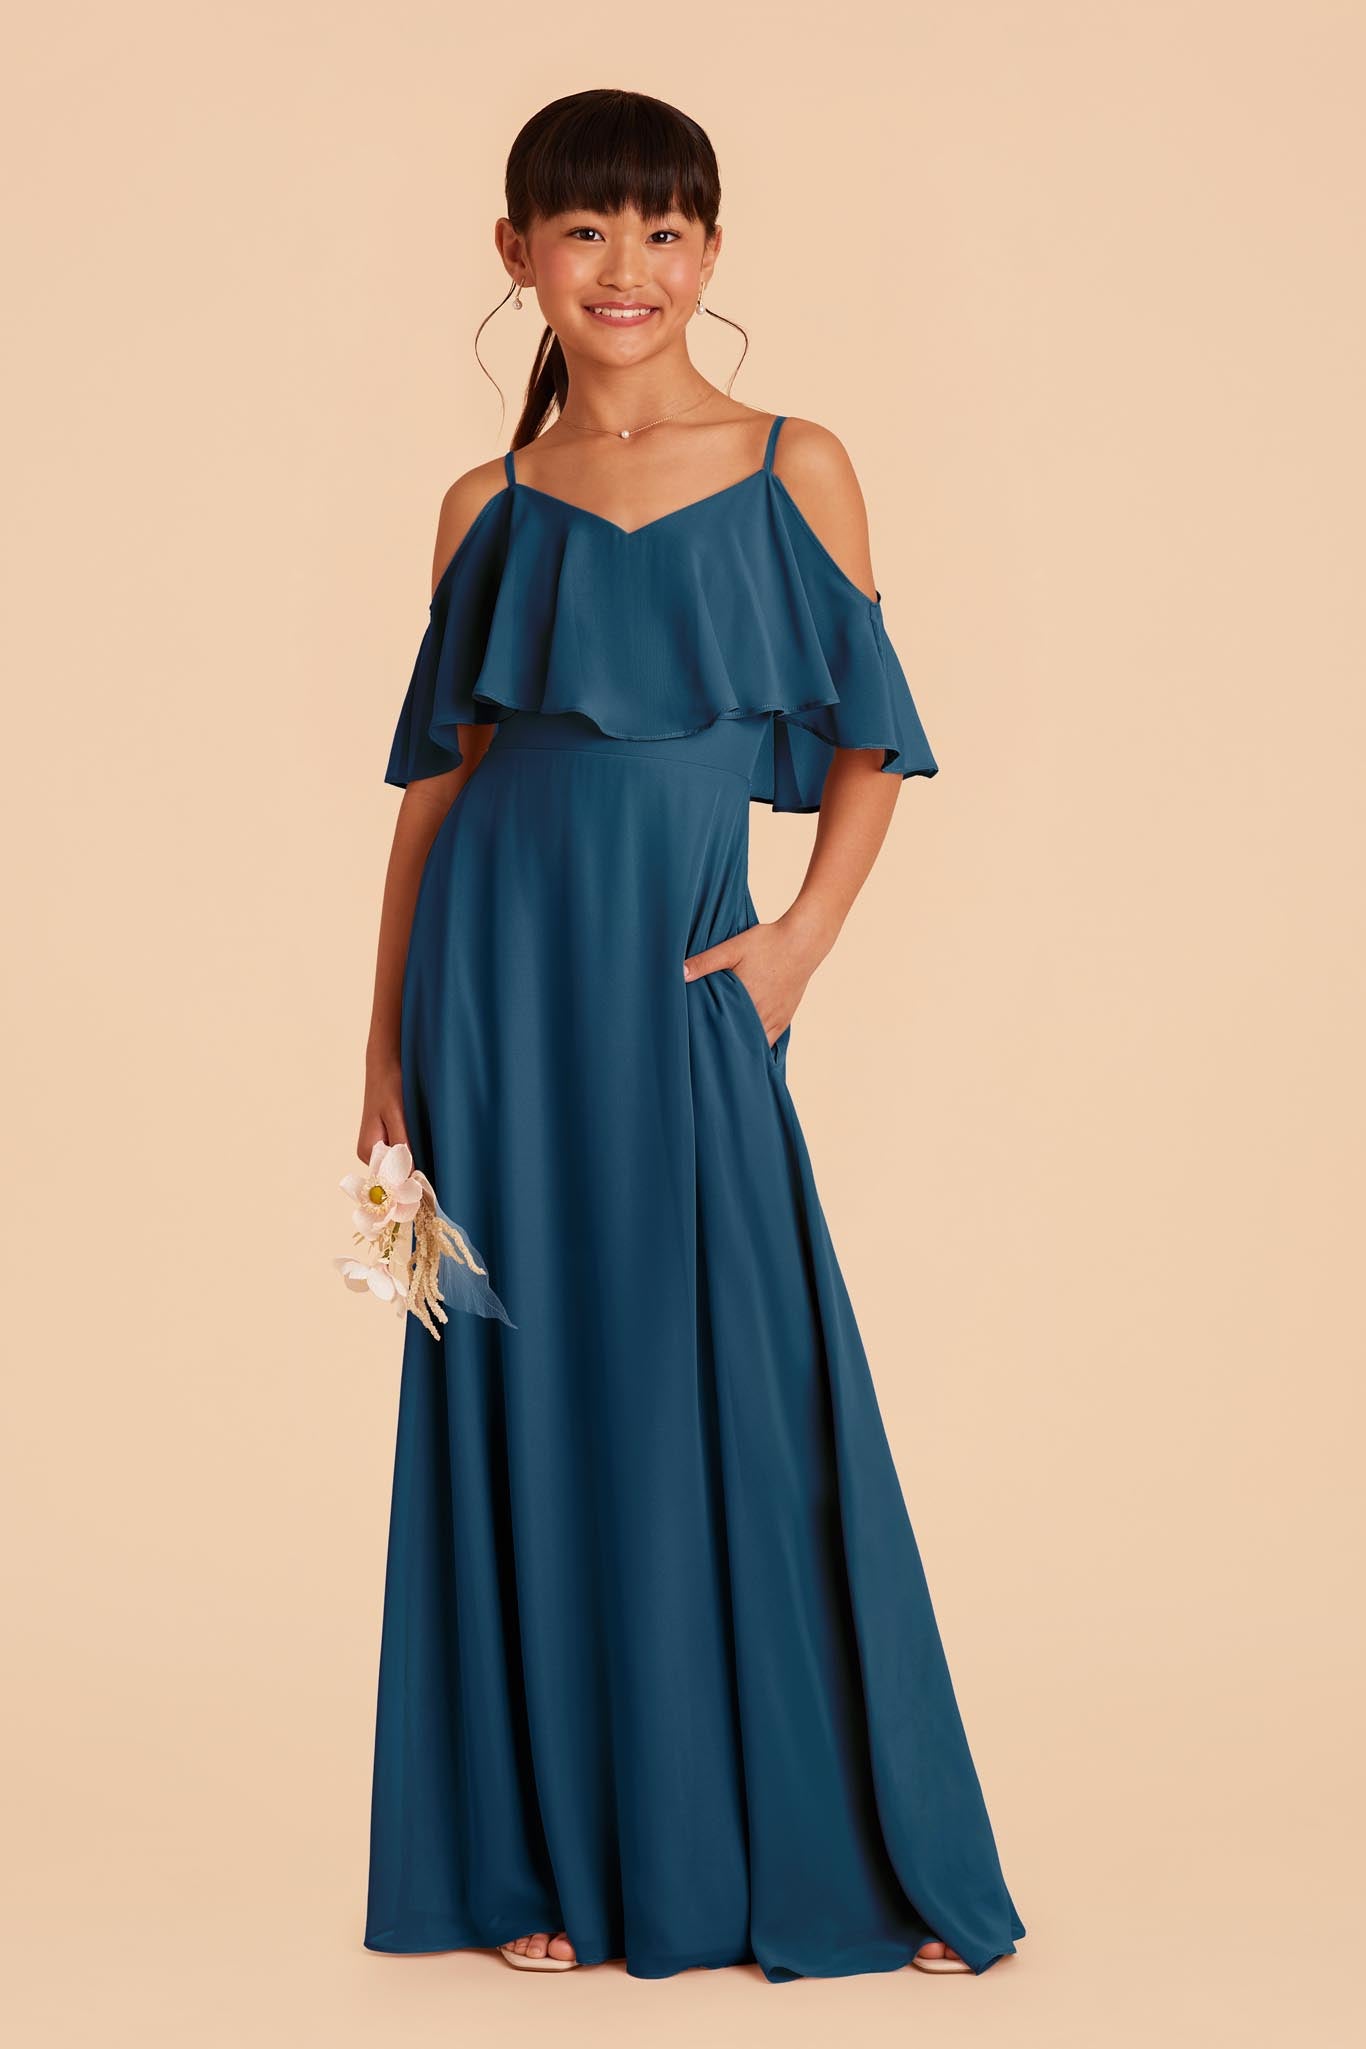 Ocean Blue Janie Convertible Junior Dress by Birdy Grey